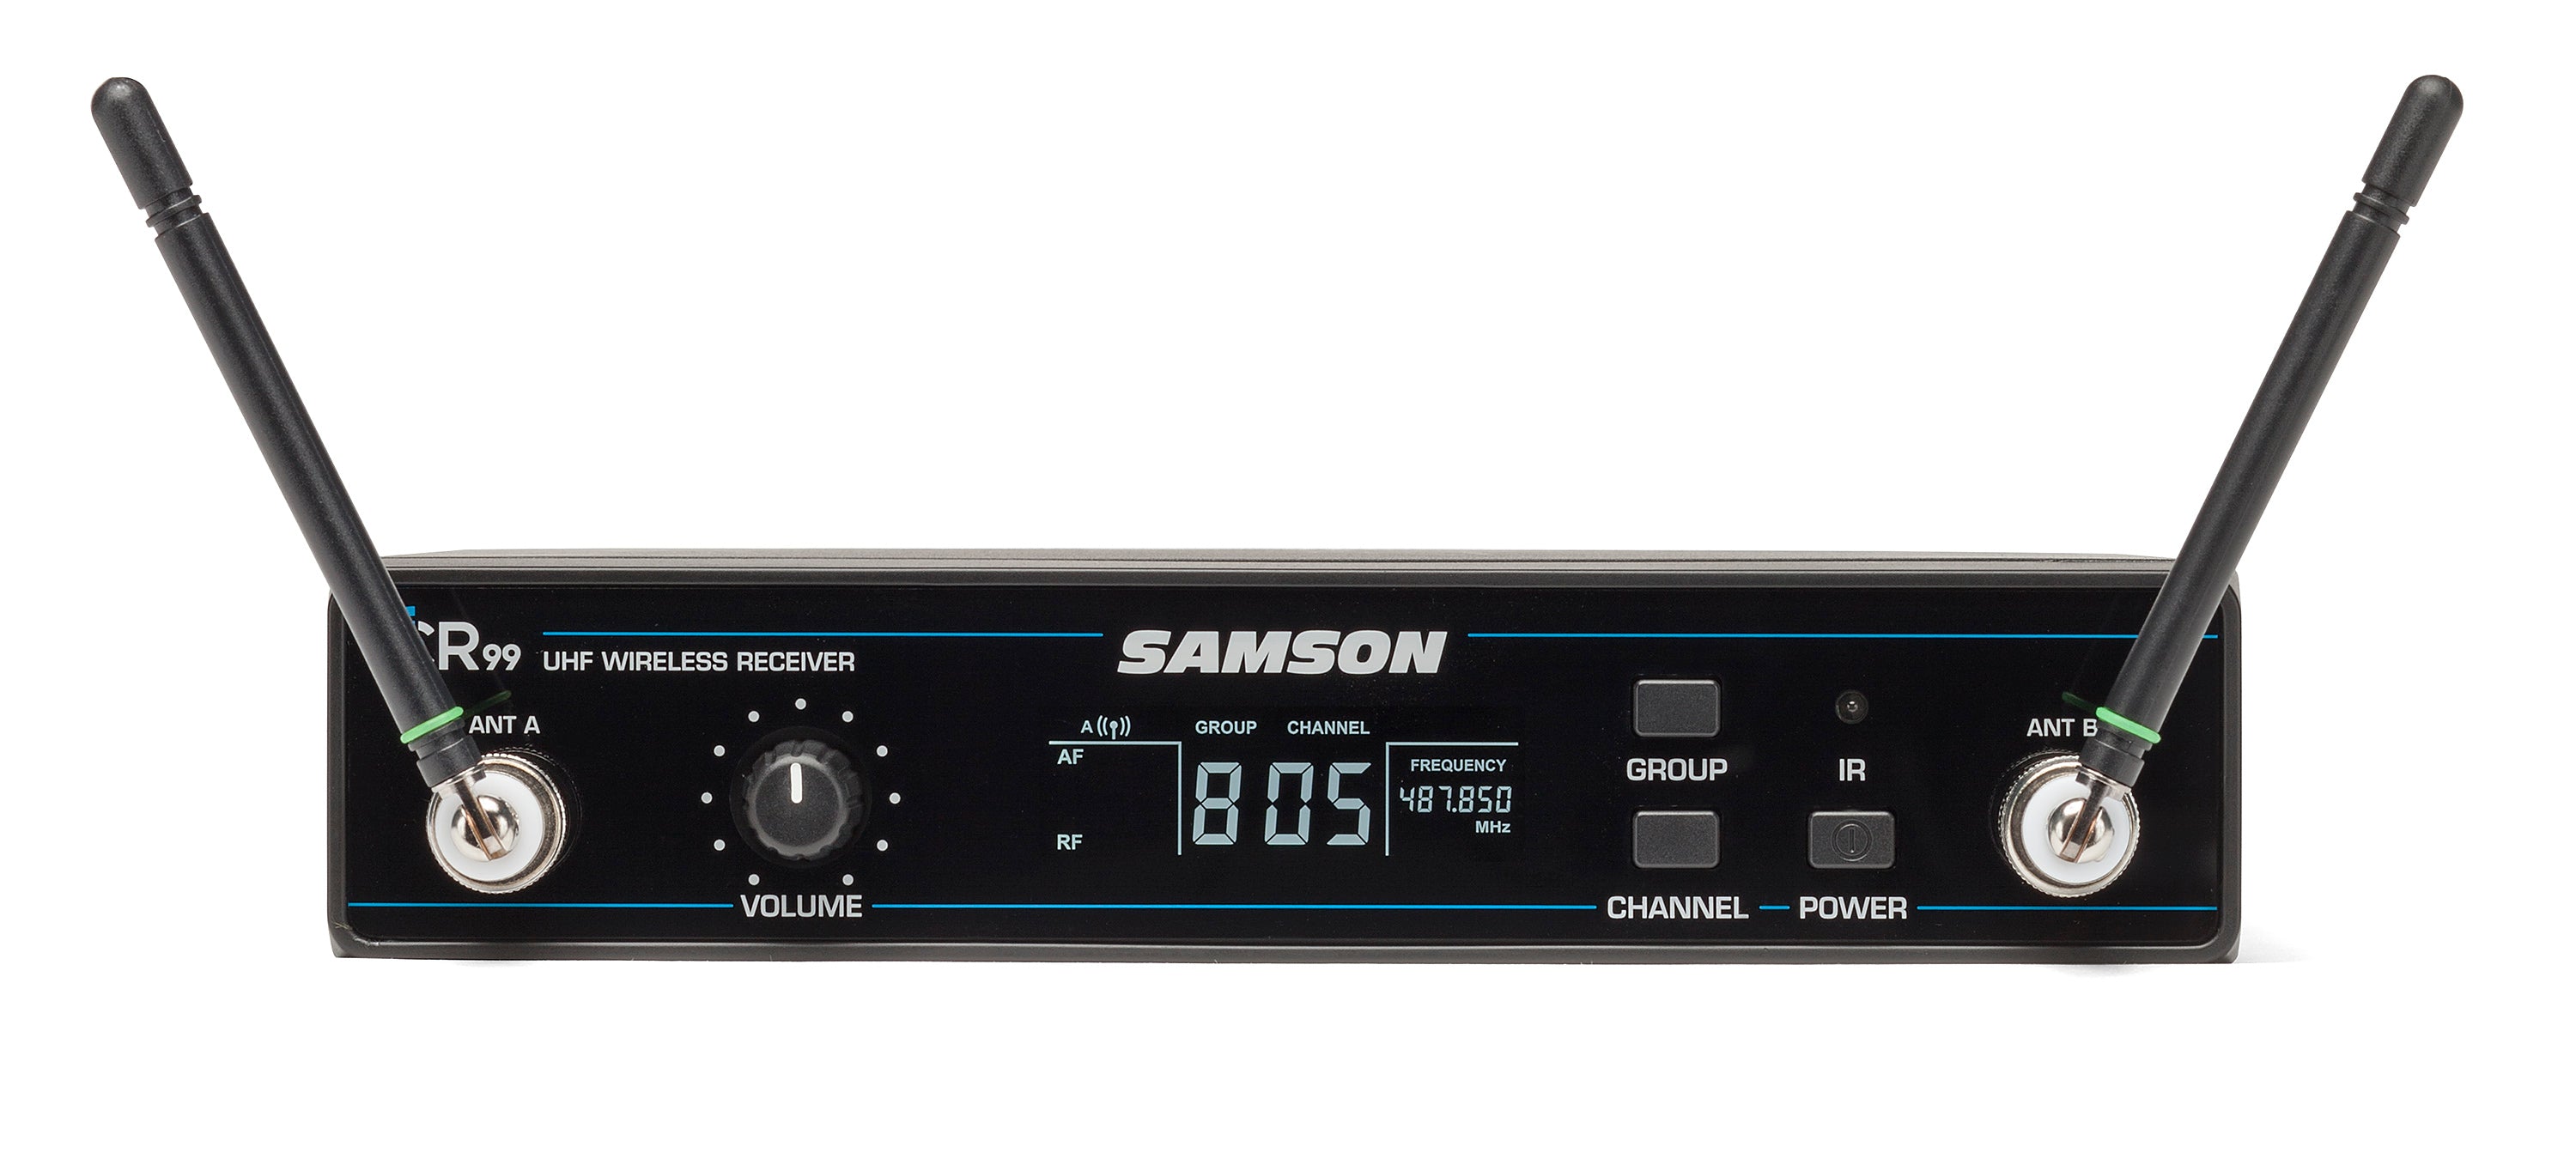 Samson Concert 99 Handheld Wireless Microphone System Package 套裝